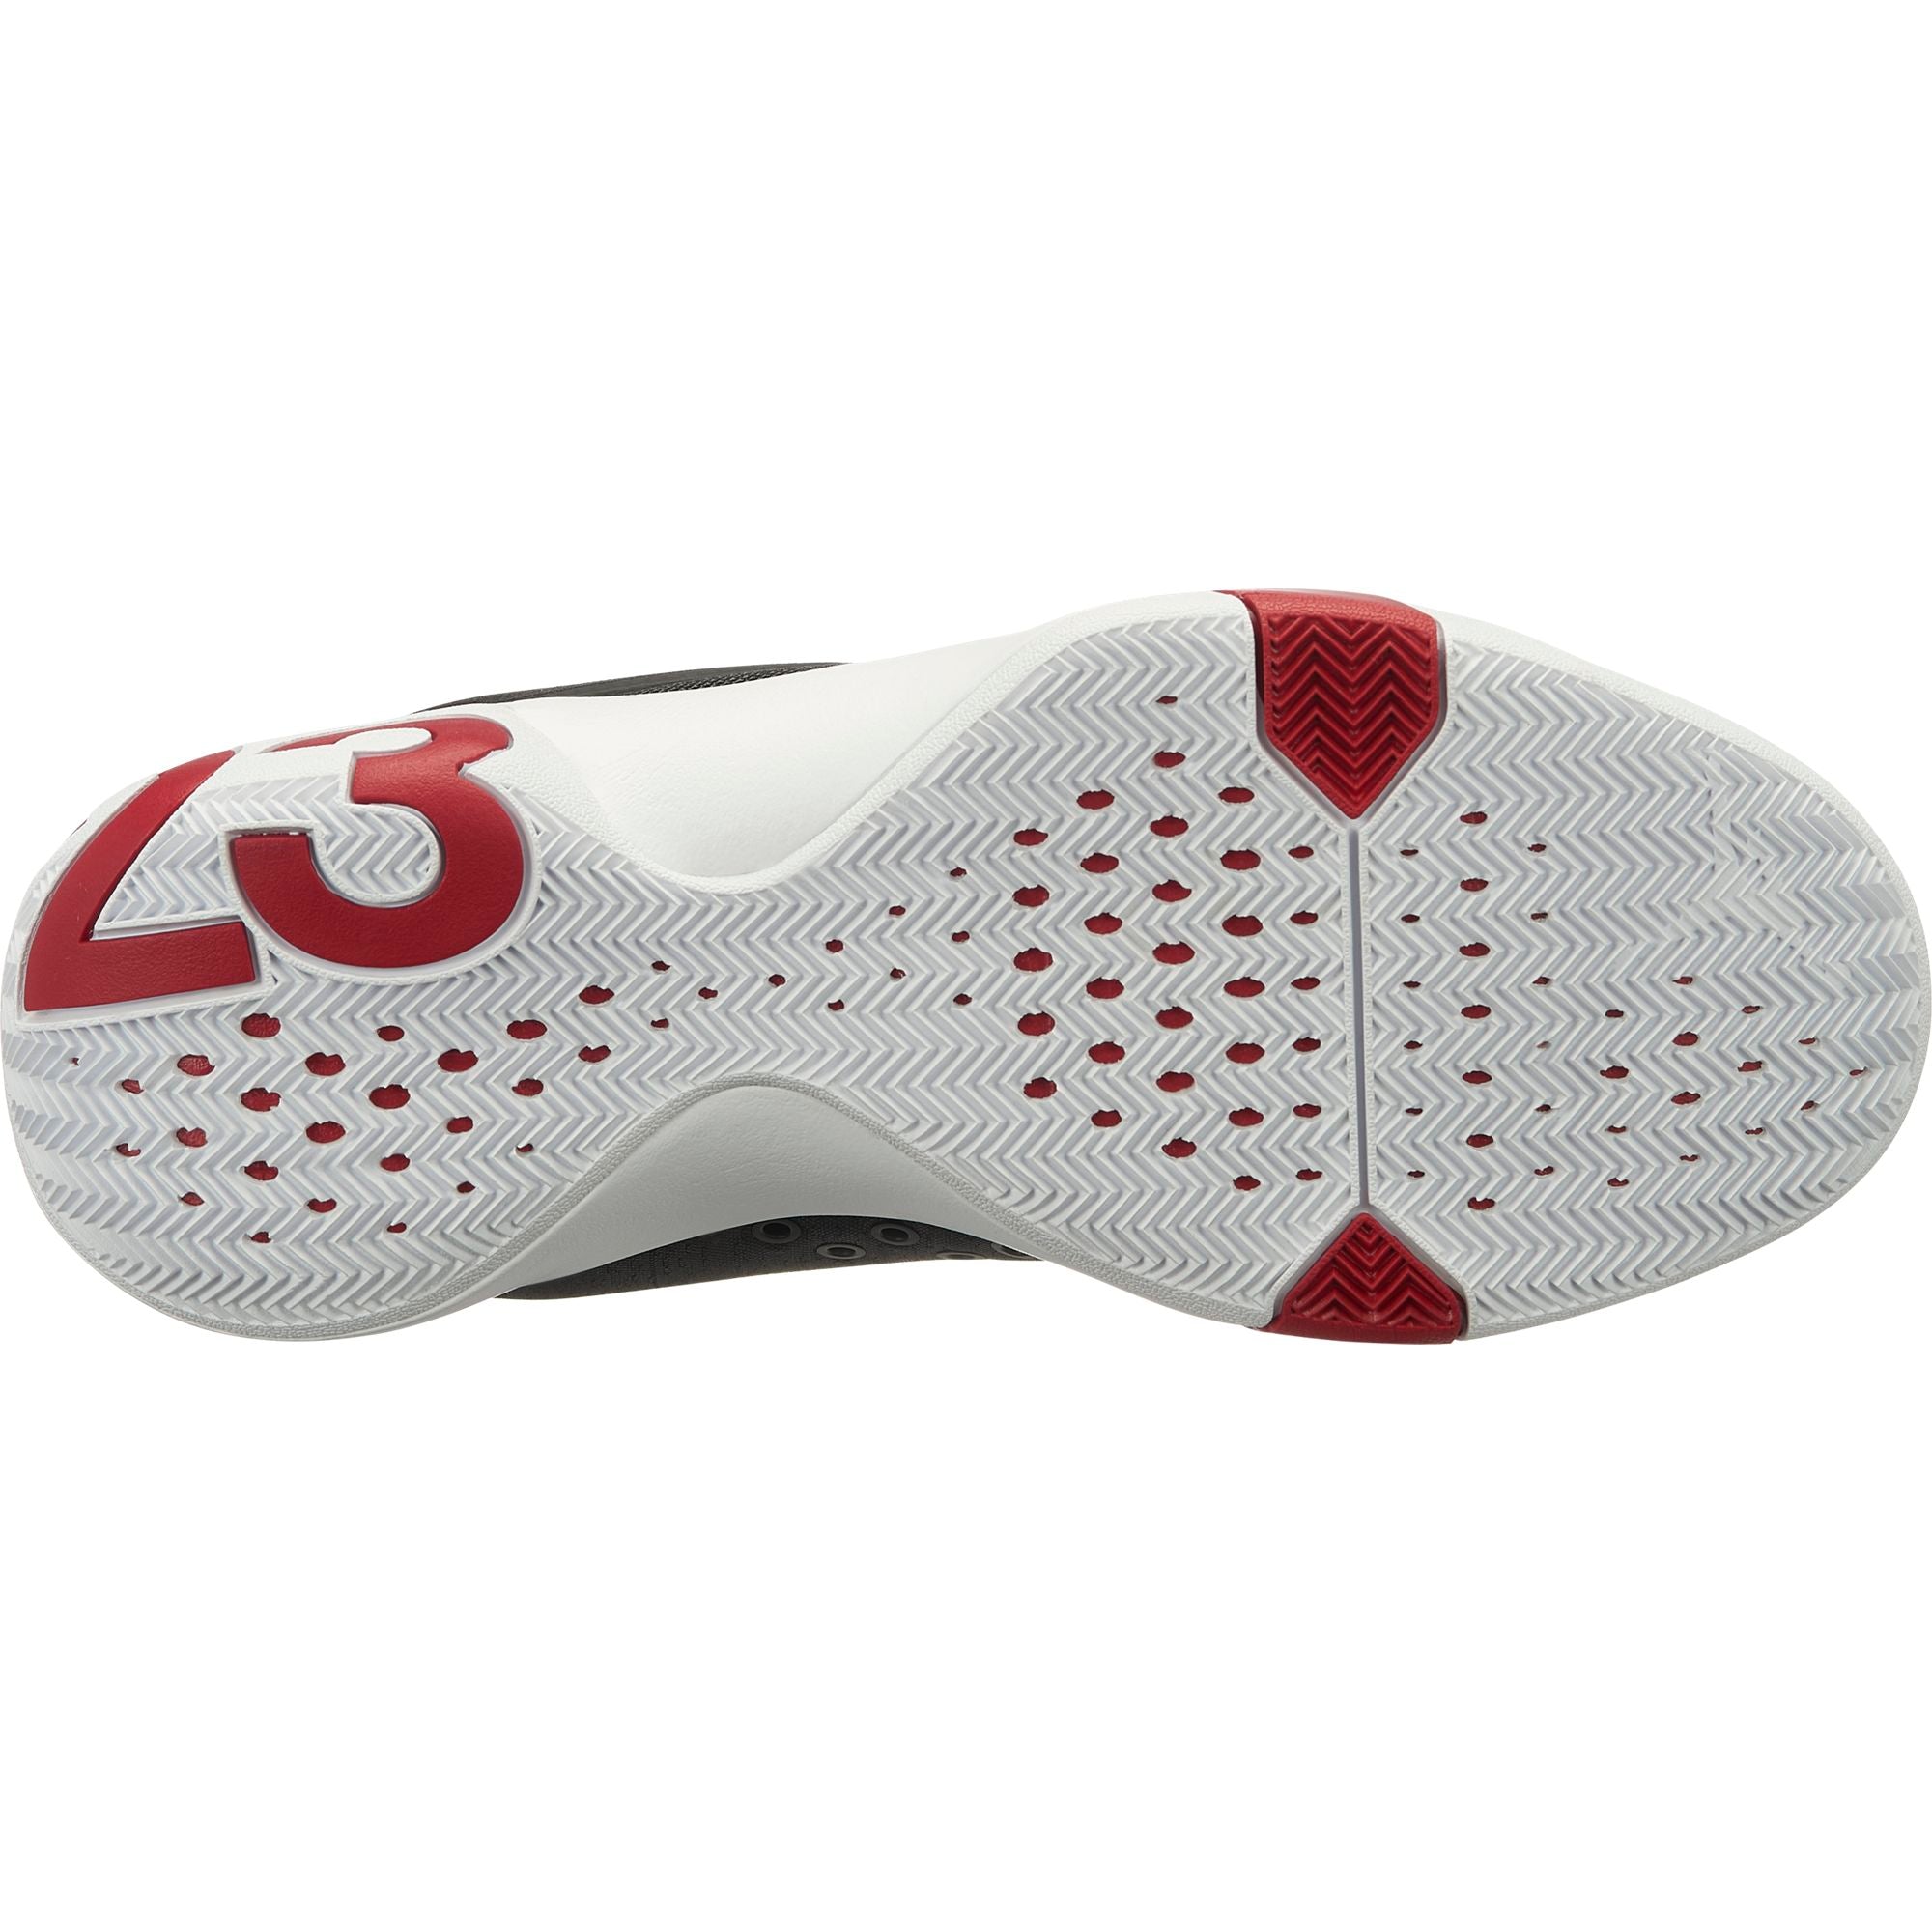 Nike Jordan Ultra Fly 3 Basketball Boot/Shoe - Black/White/Gym Red